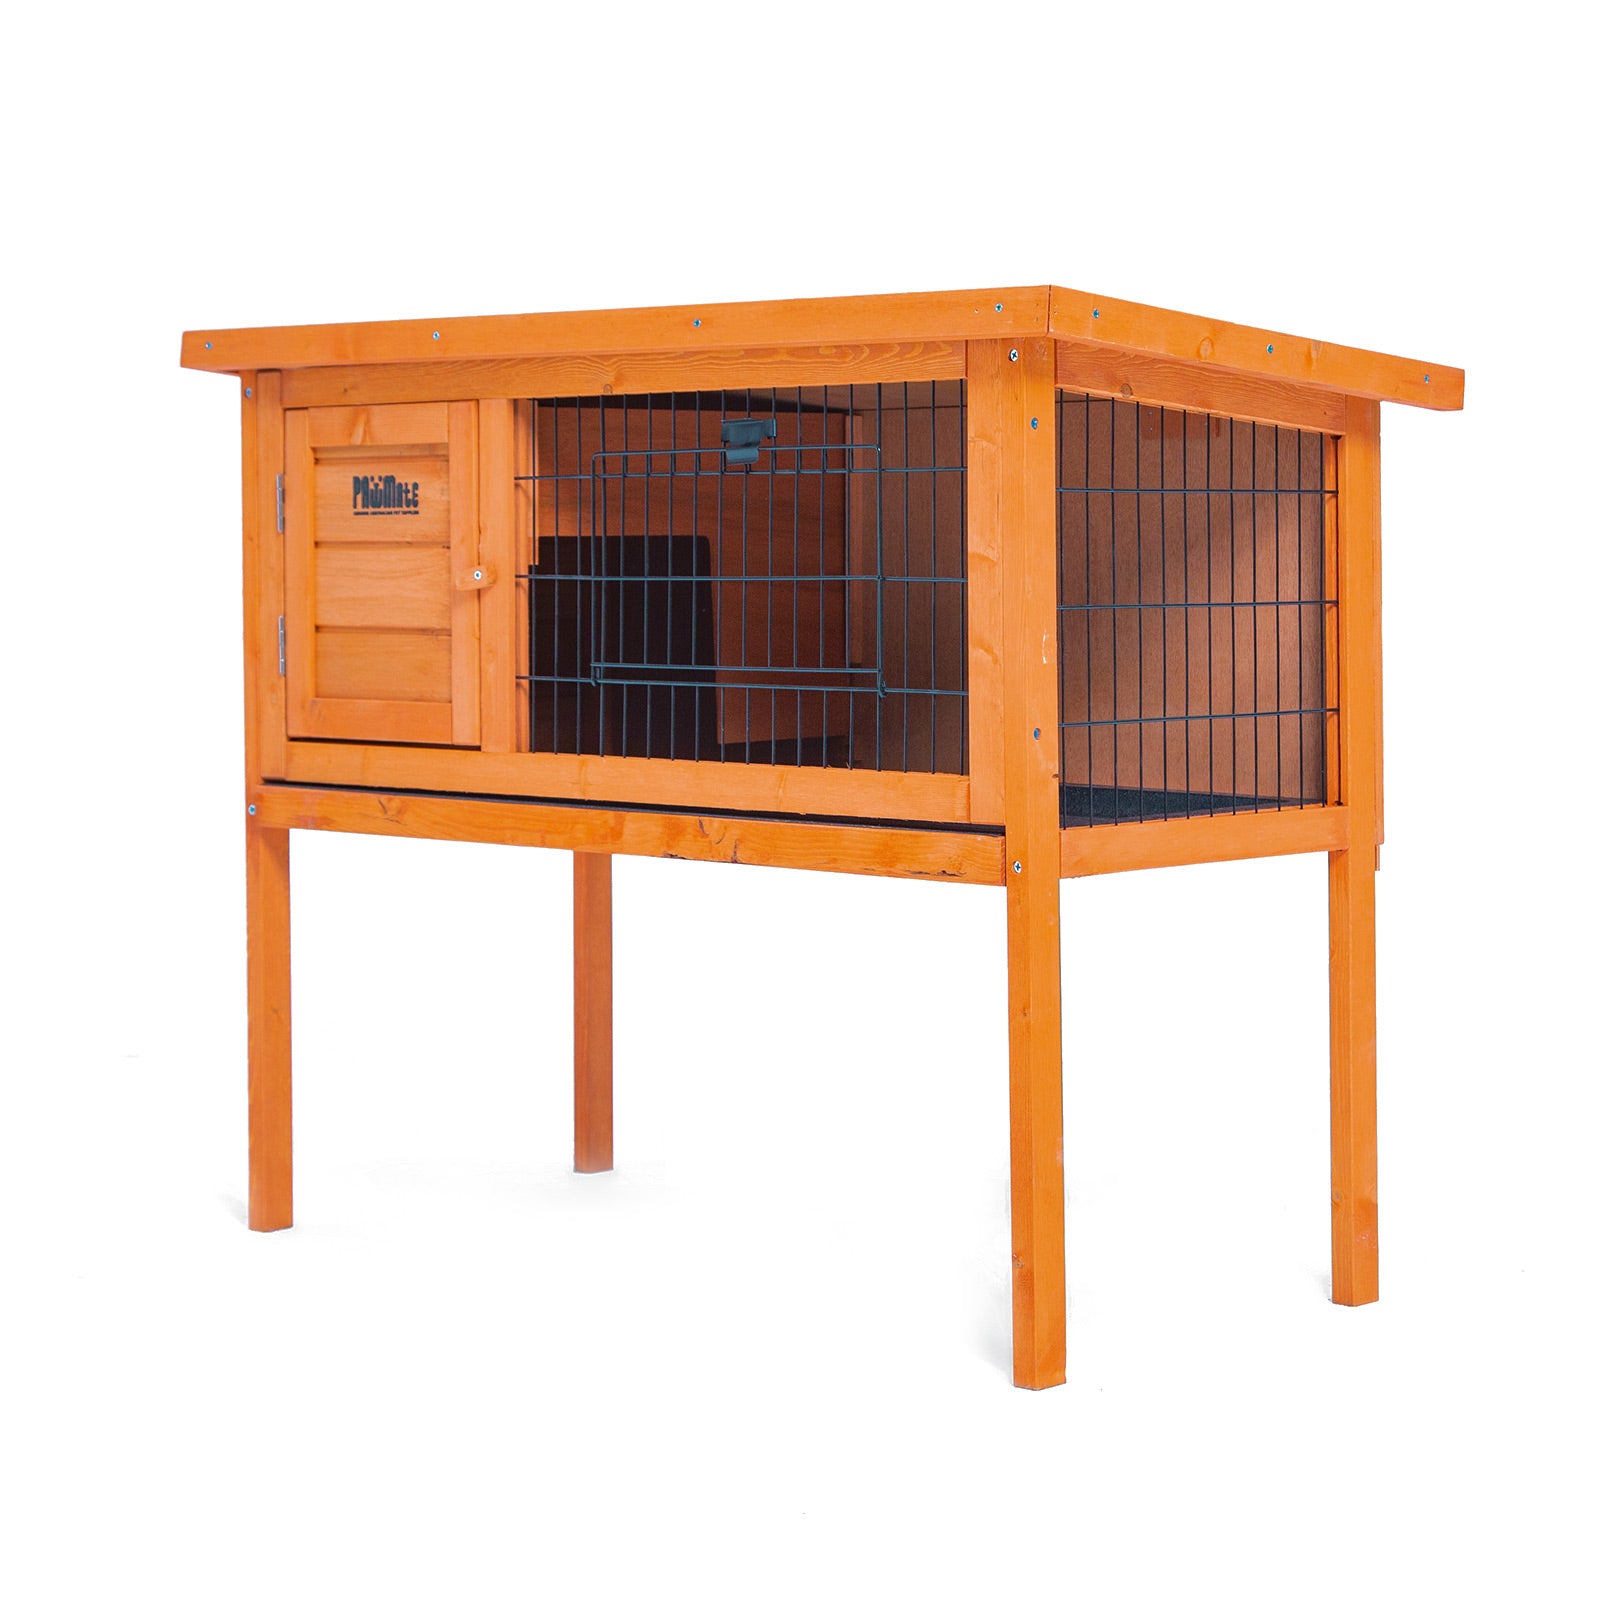 91 x 45 x 70cm Rabbit Hutch Chicken Coop Free Standing Cage Run - image1